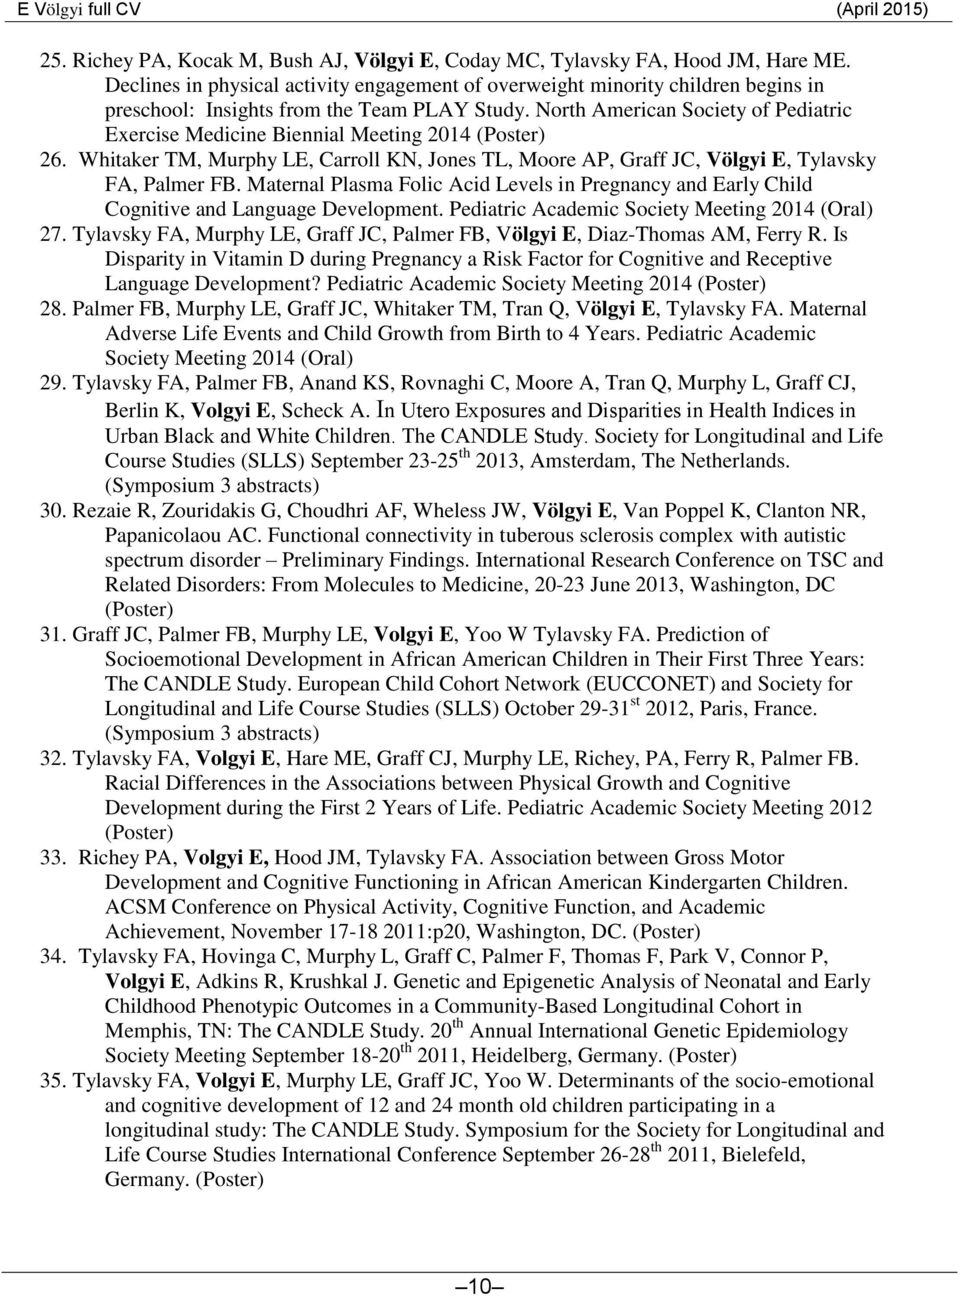 North American Society of Pediatric Exercise Medicine Biennial Meeting 2014 (Poster) 26. Whitaker TM, Murphy LE, Carroll KN, Jones TL, Moore AP, Graff JC, Völgyi E, Tylavsky FA, Palmer FB.